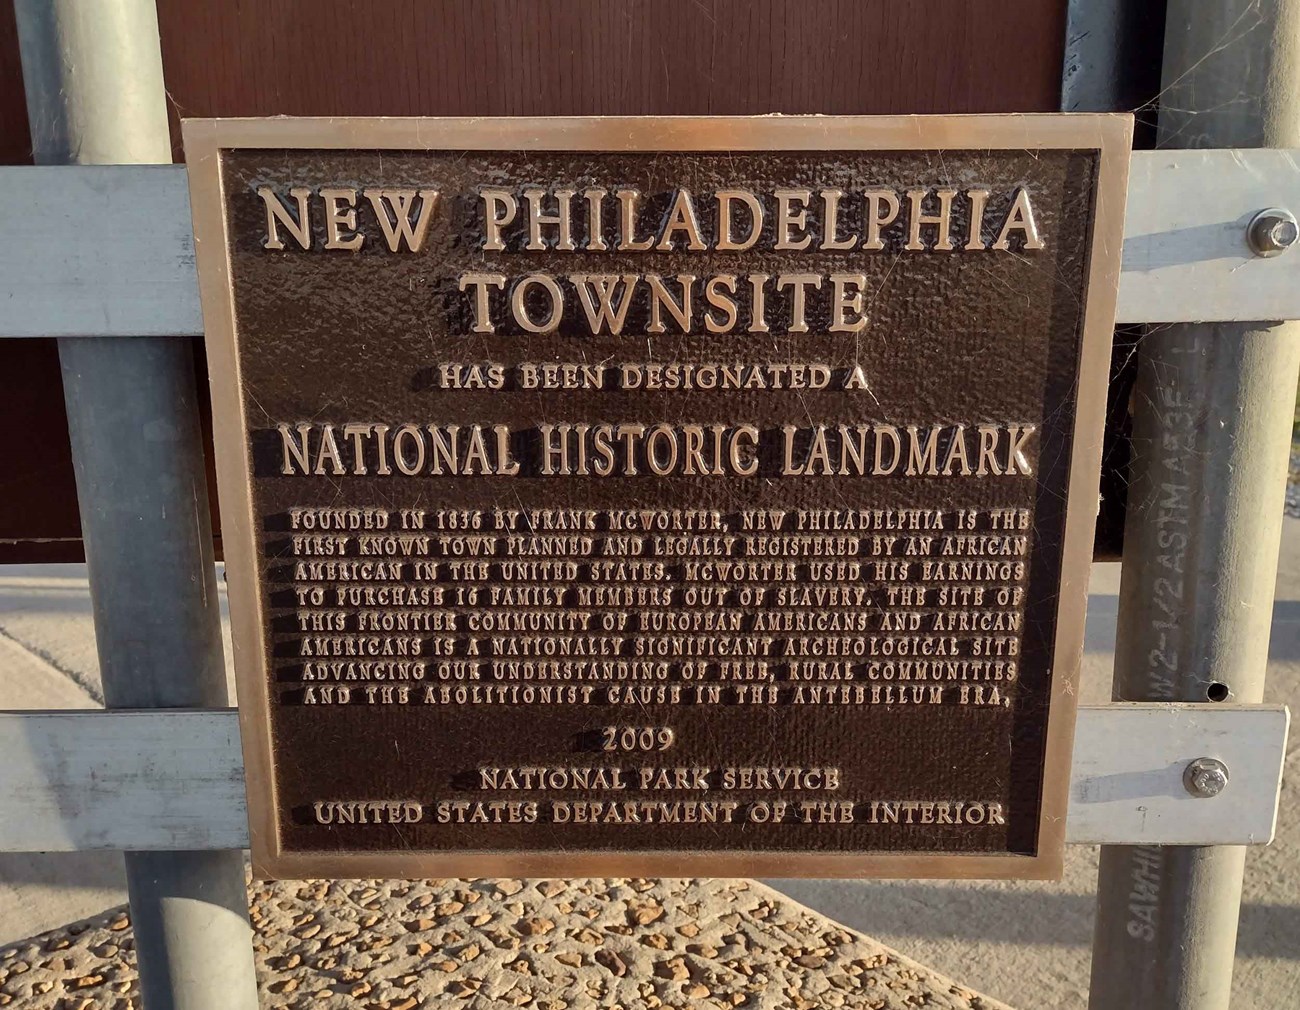 Photograph of a National Historic Landmark plaque for New Philadelphia.